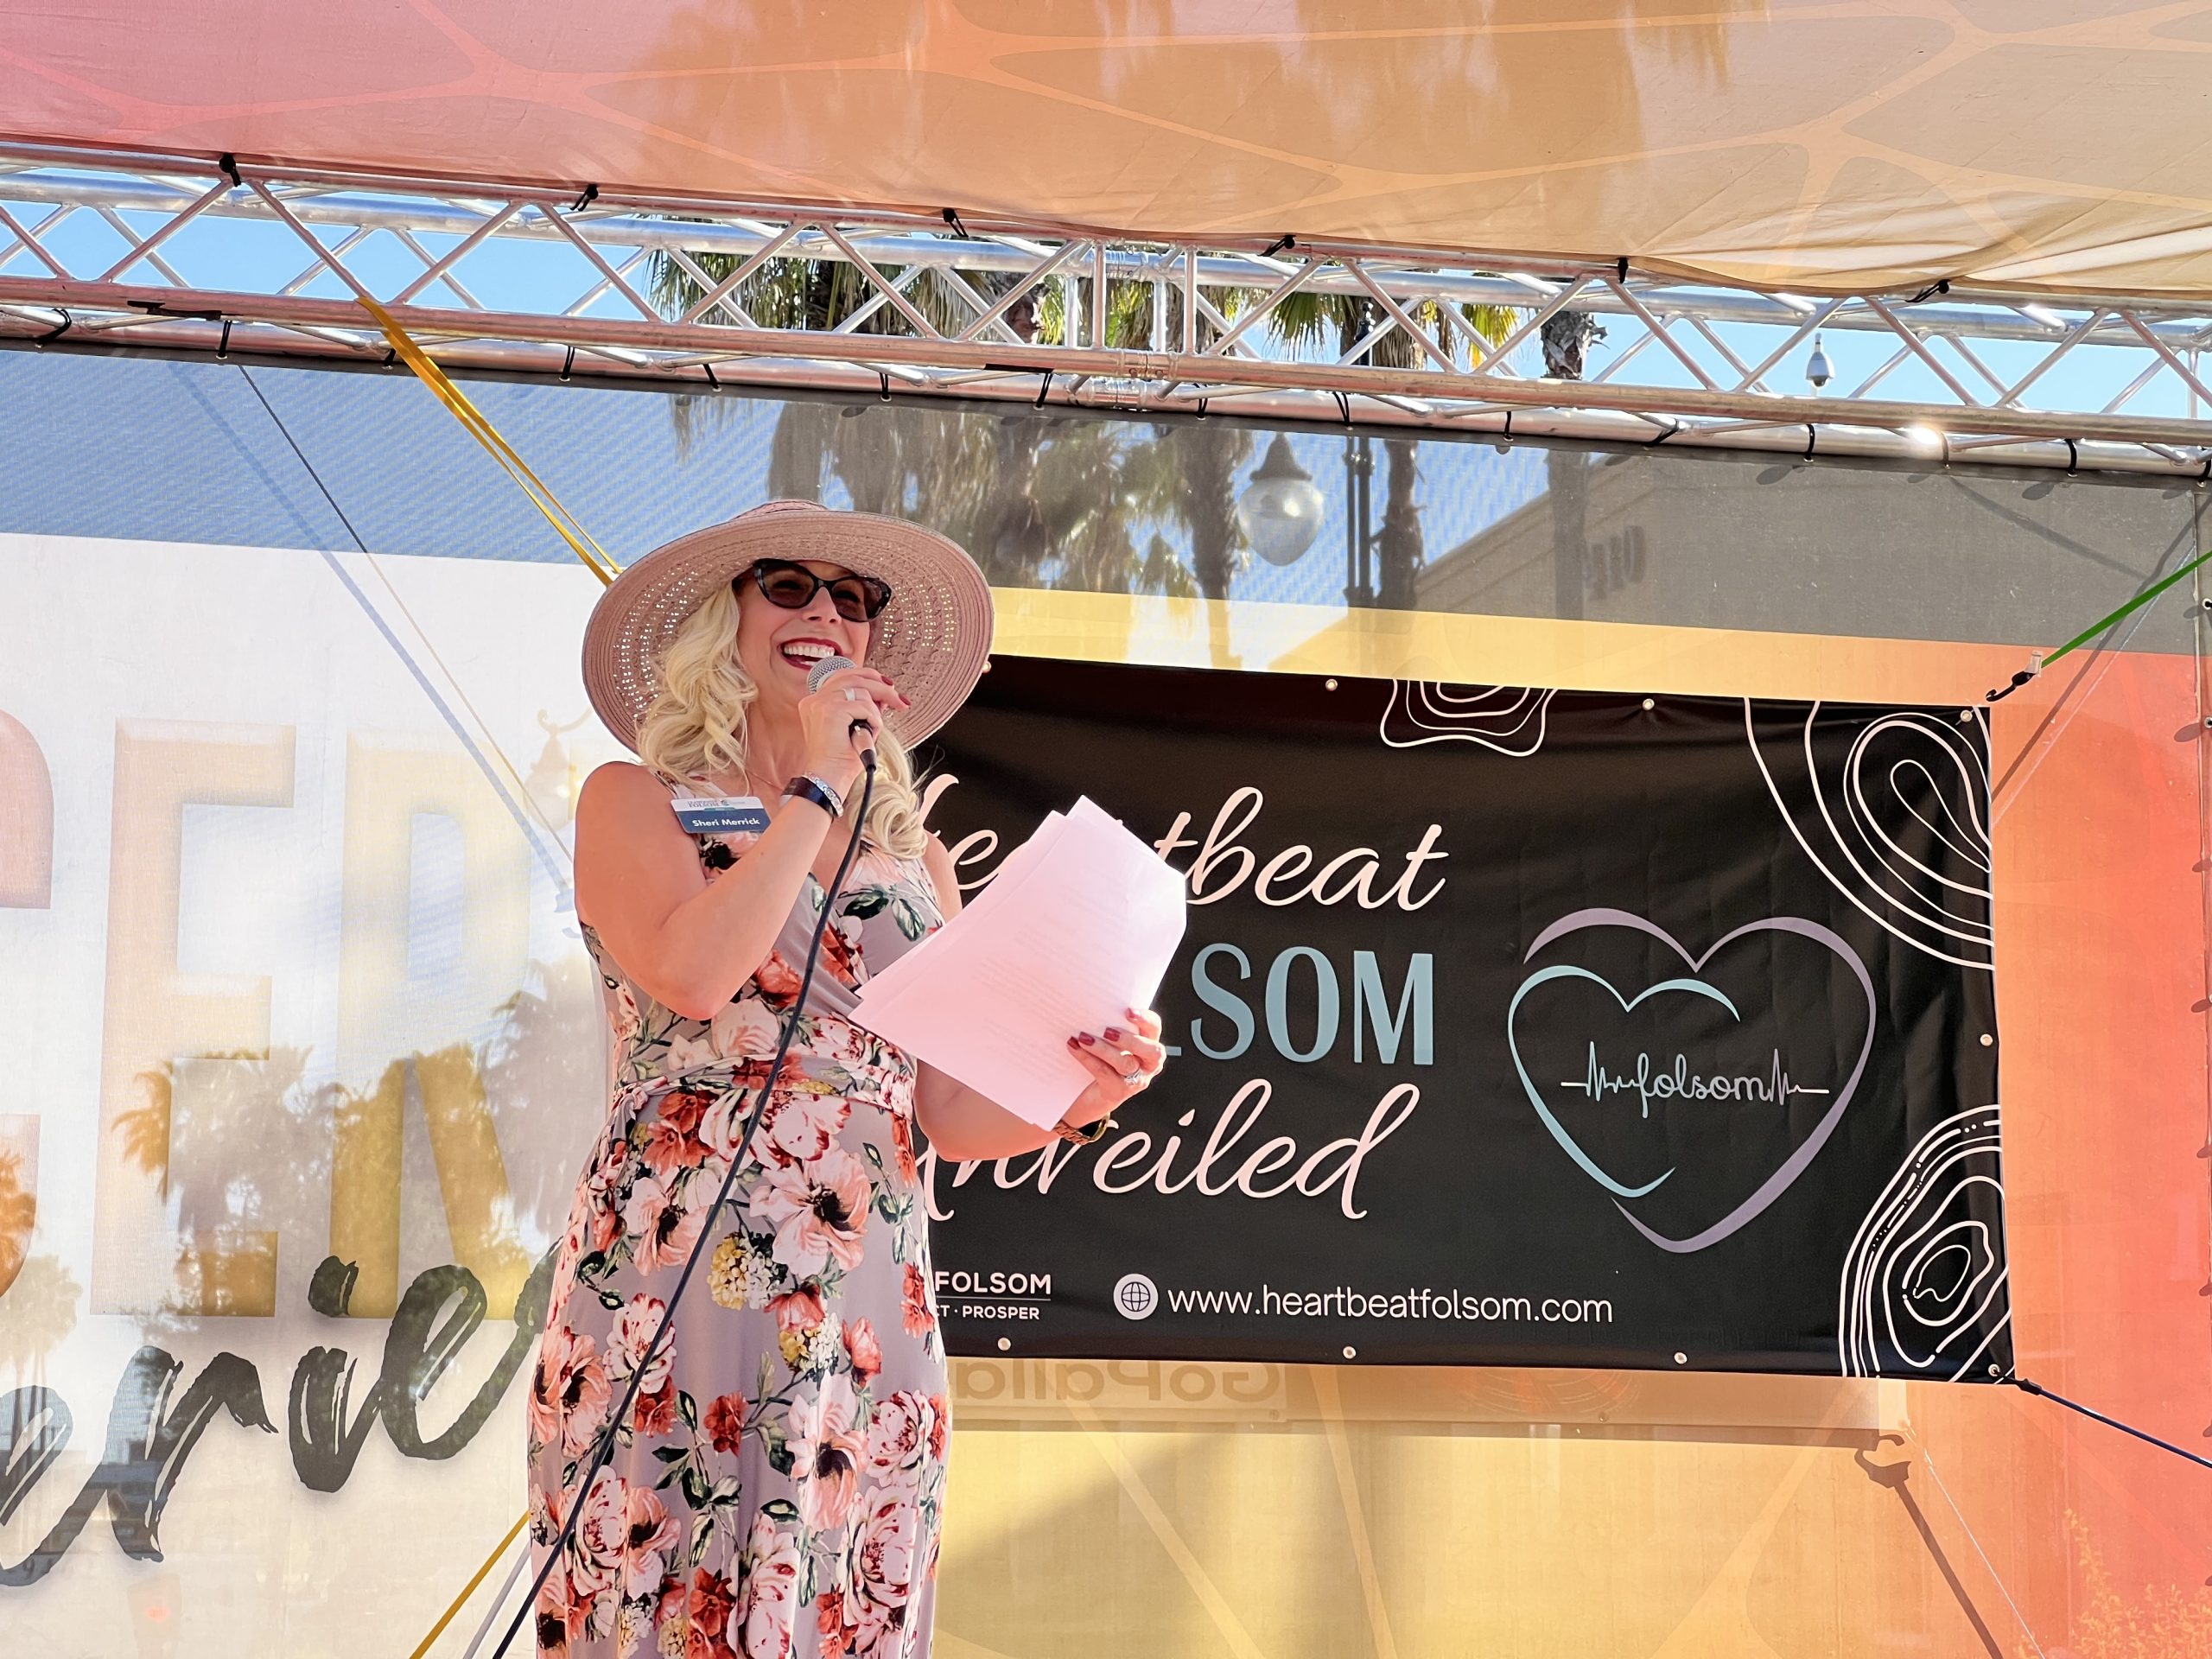 Community, artists shine as Choose Folsom celebrates Heartbeat of Folsom